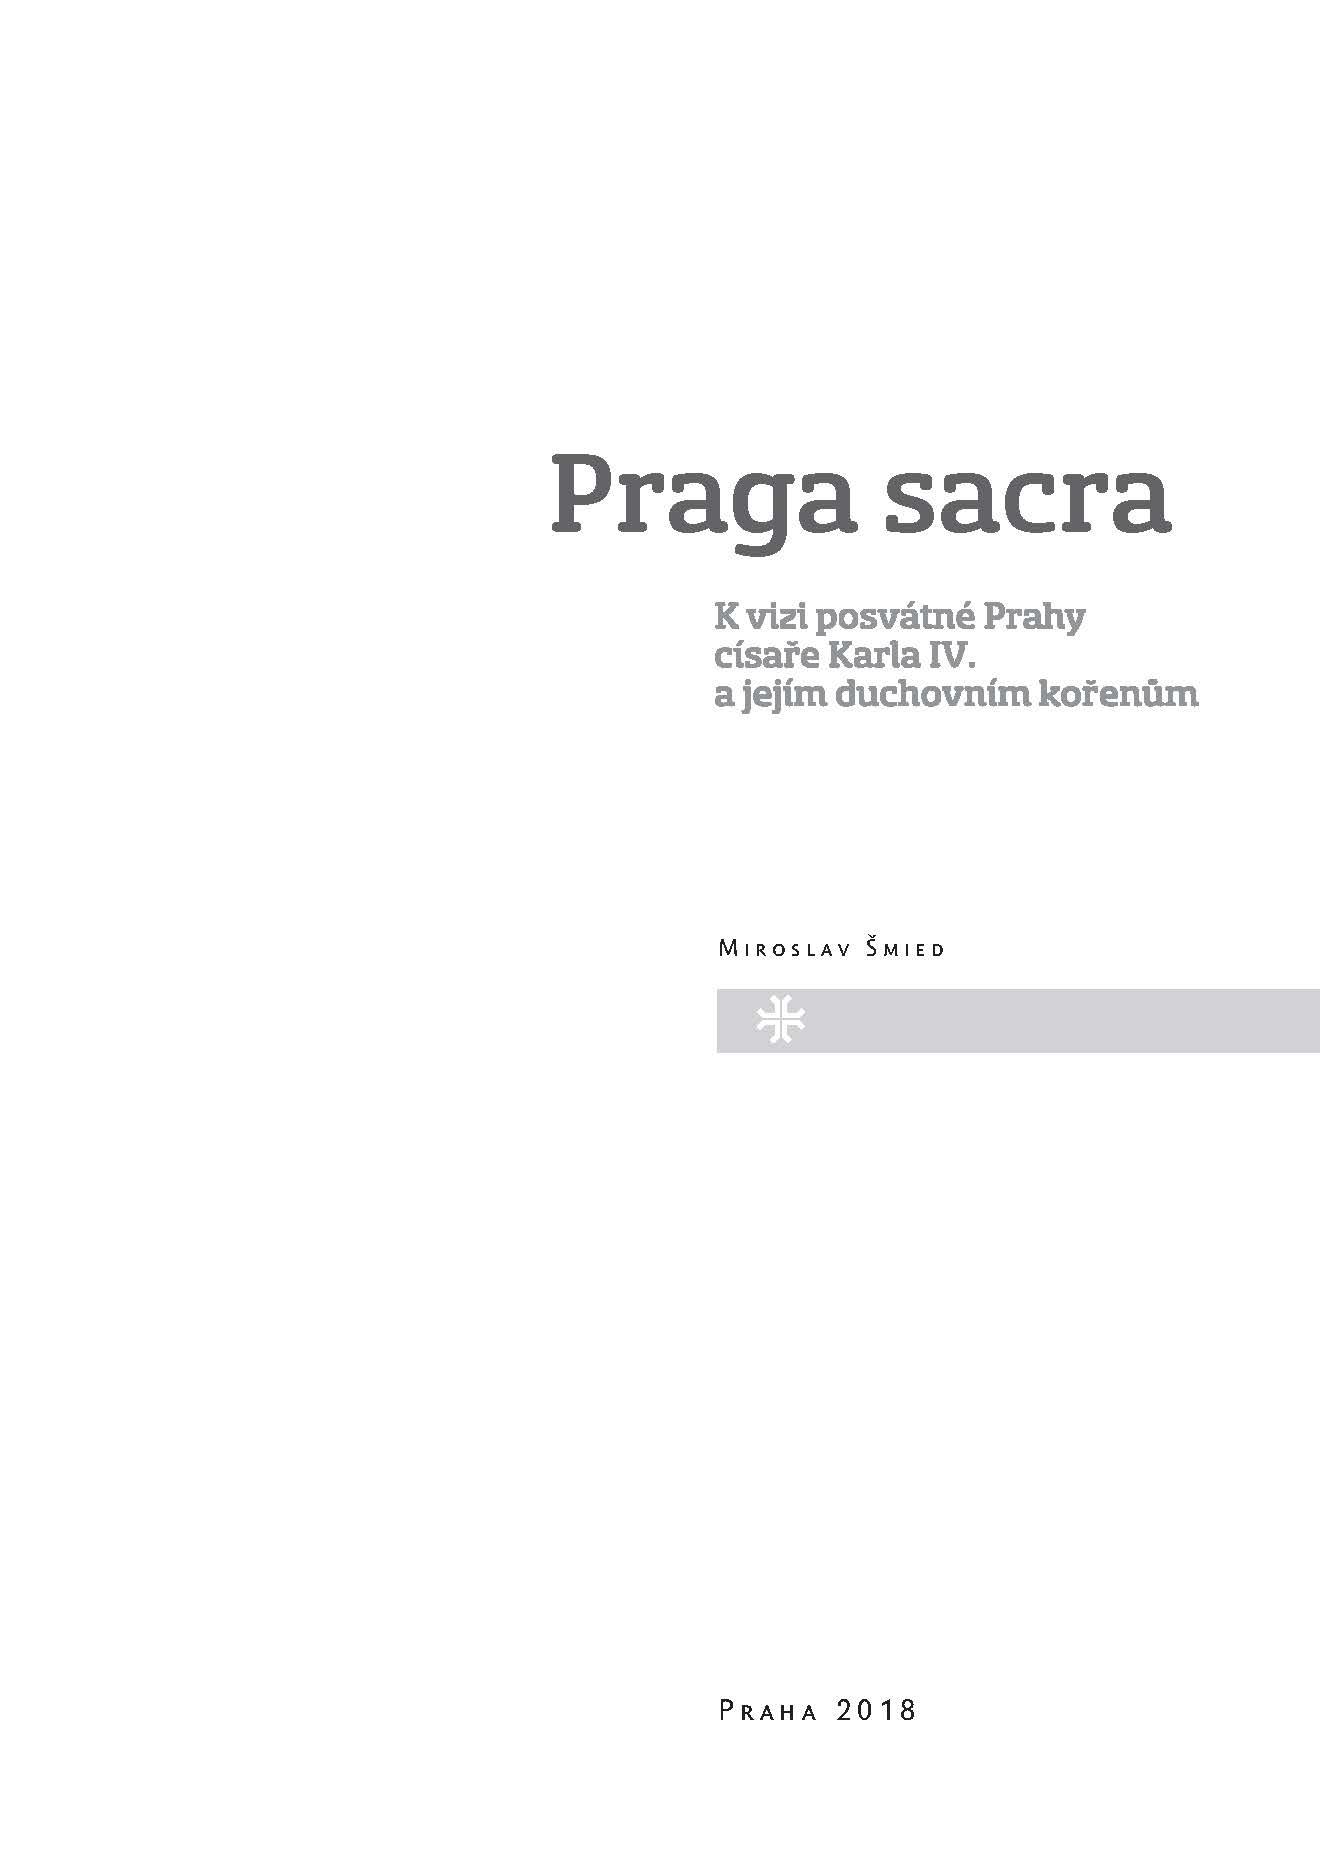 Praga sacra ukázka-1